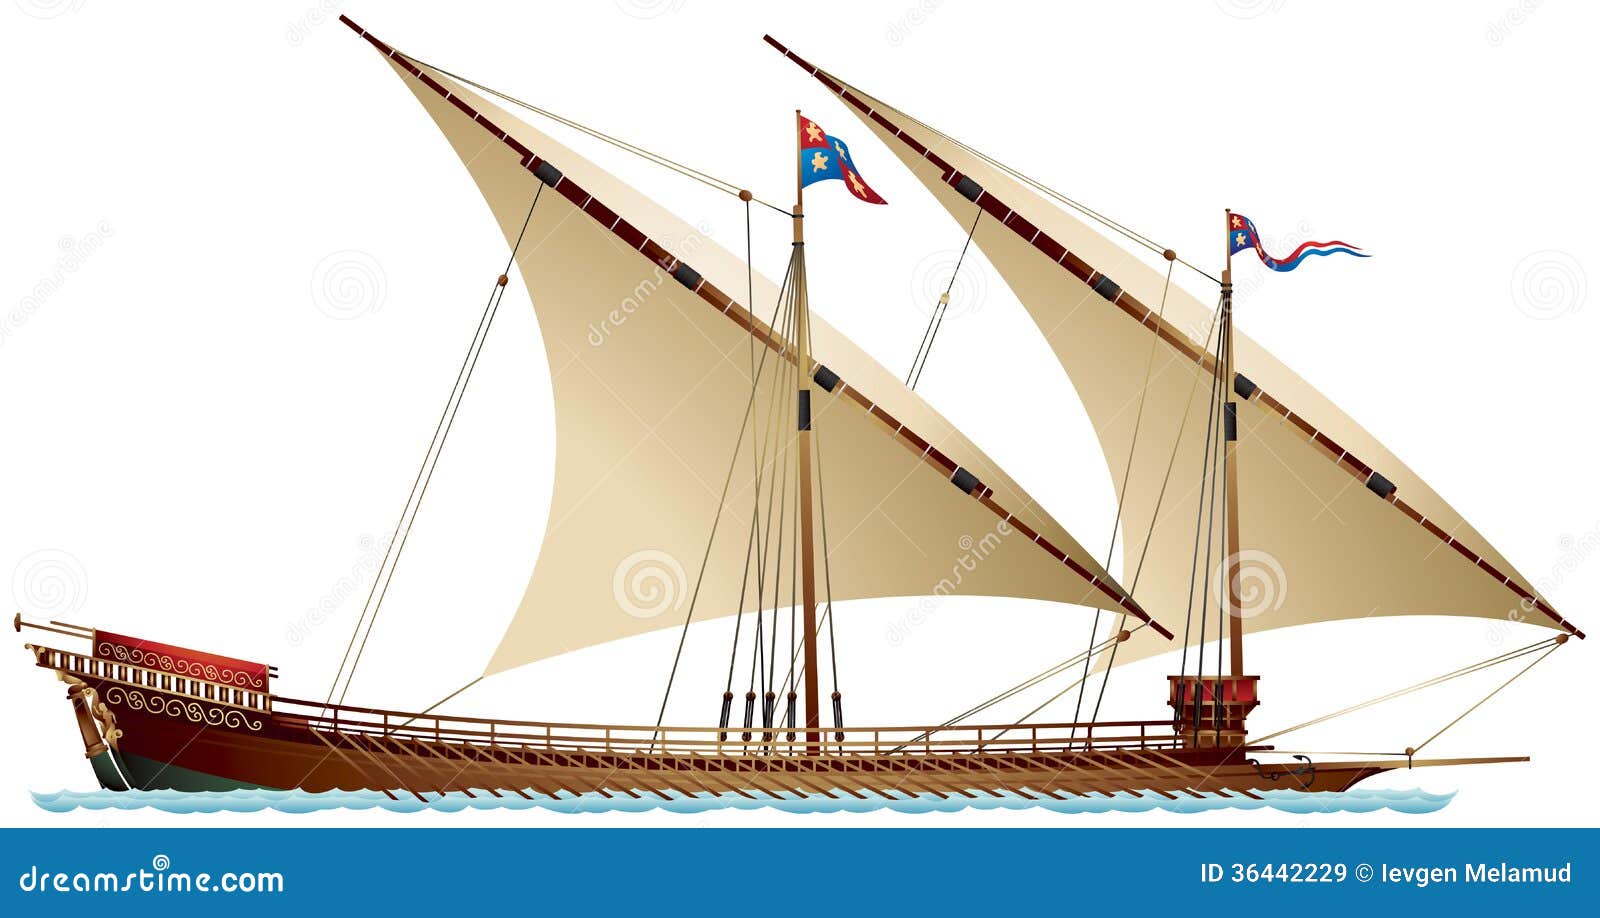 Galley stock illustration. Image of piracy, warfare, trade 